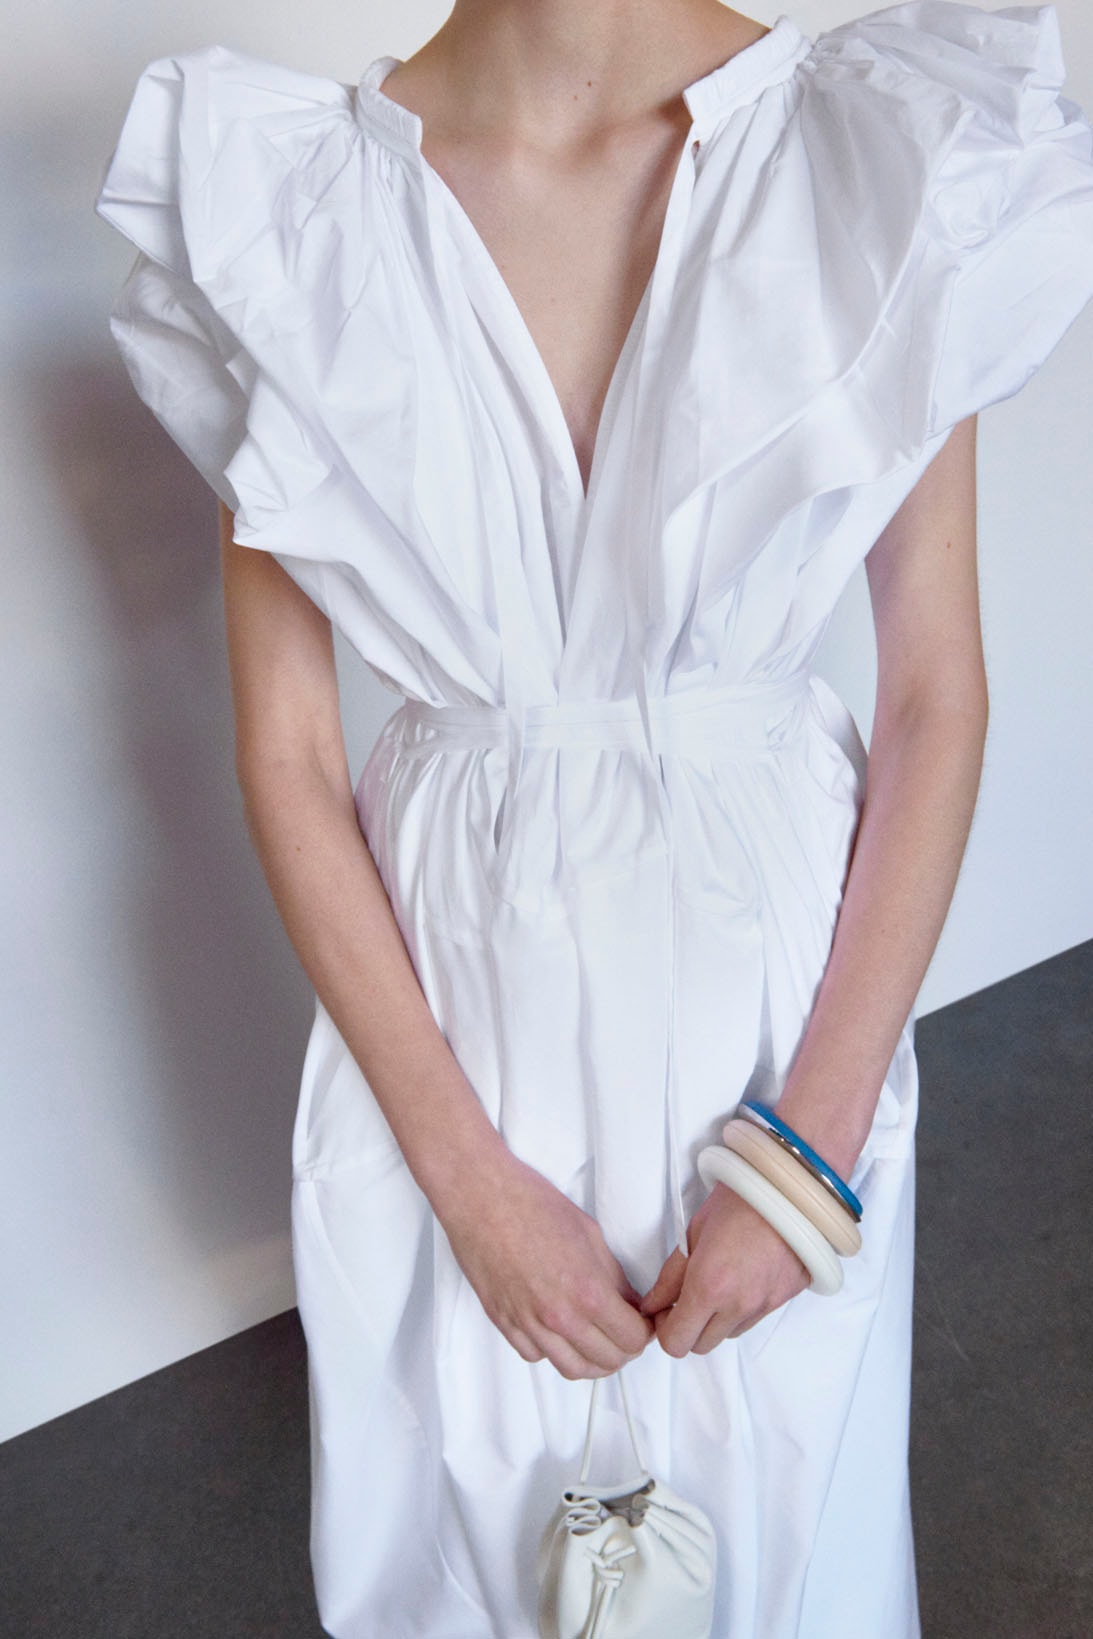 jil sander resort 2021 womens collection lucie luke meier minimalist blazers skirts dresses